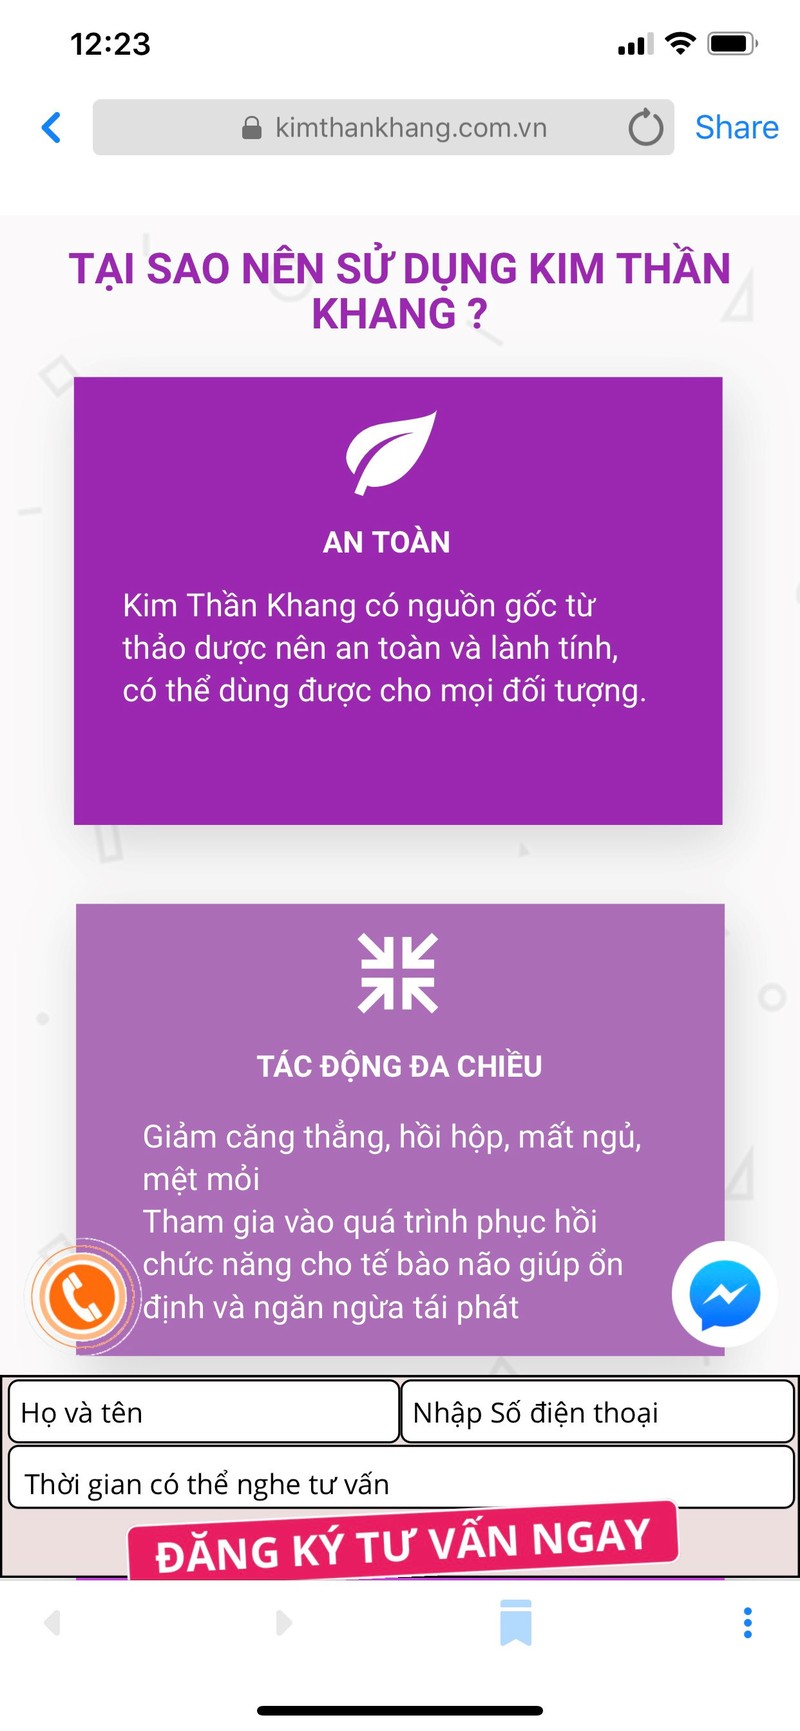 Hoang mang TPCN Kim Than Khang duoc quang cao nhu thuoc tri benh-Hinh-2